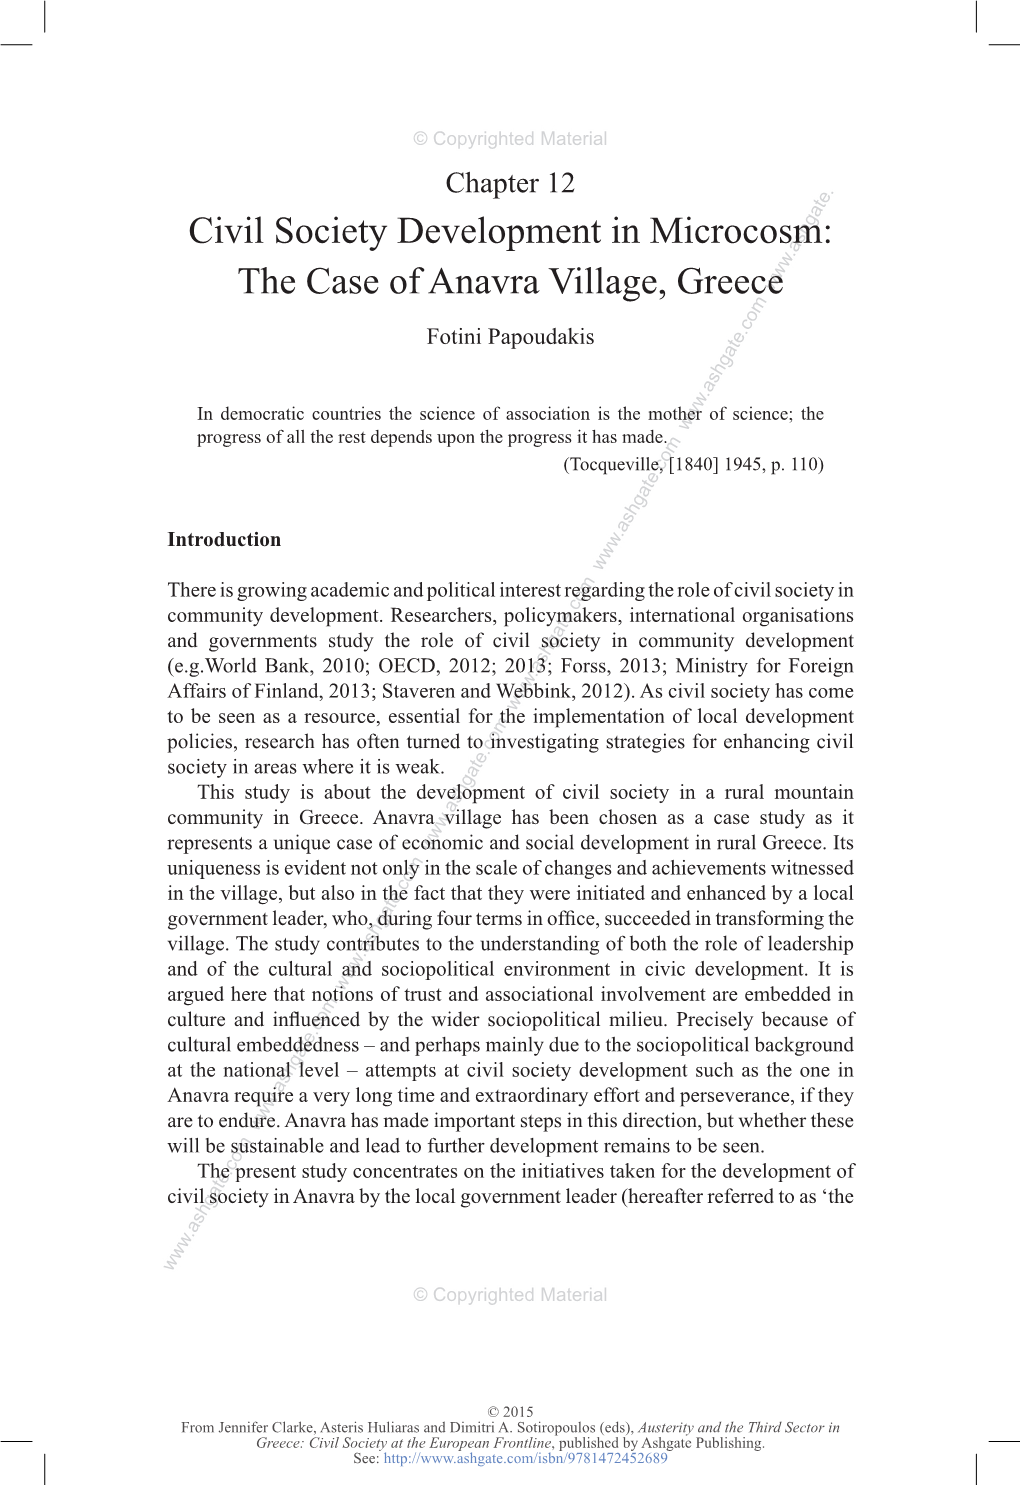 Civil Society Development in Microcosm: the Case of Anavra